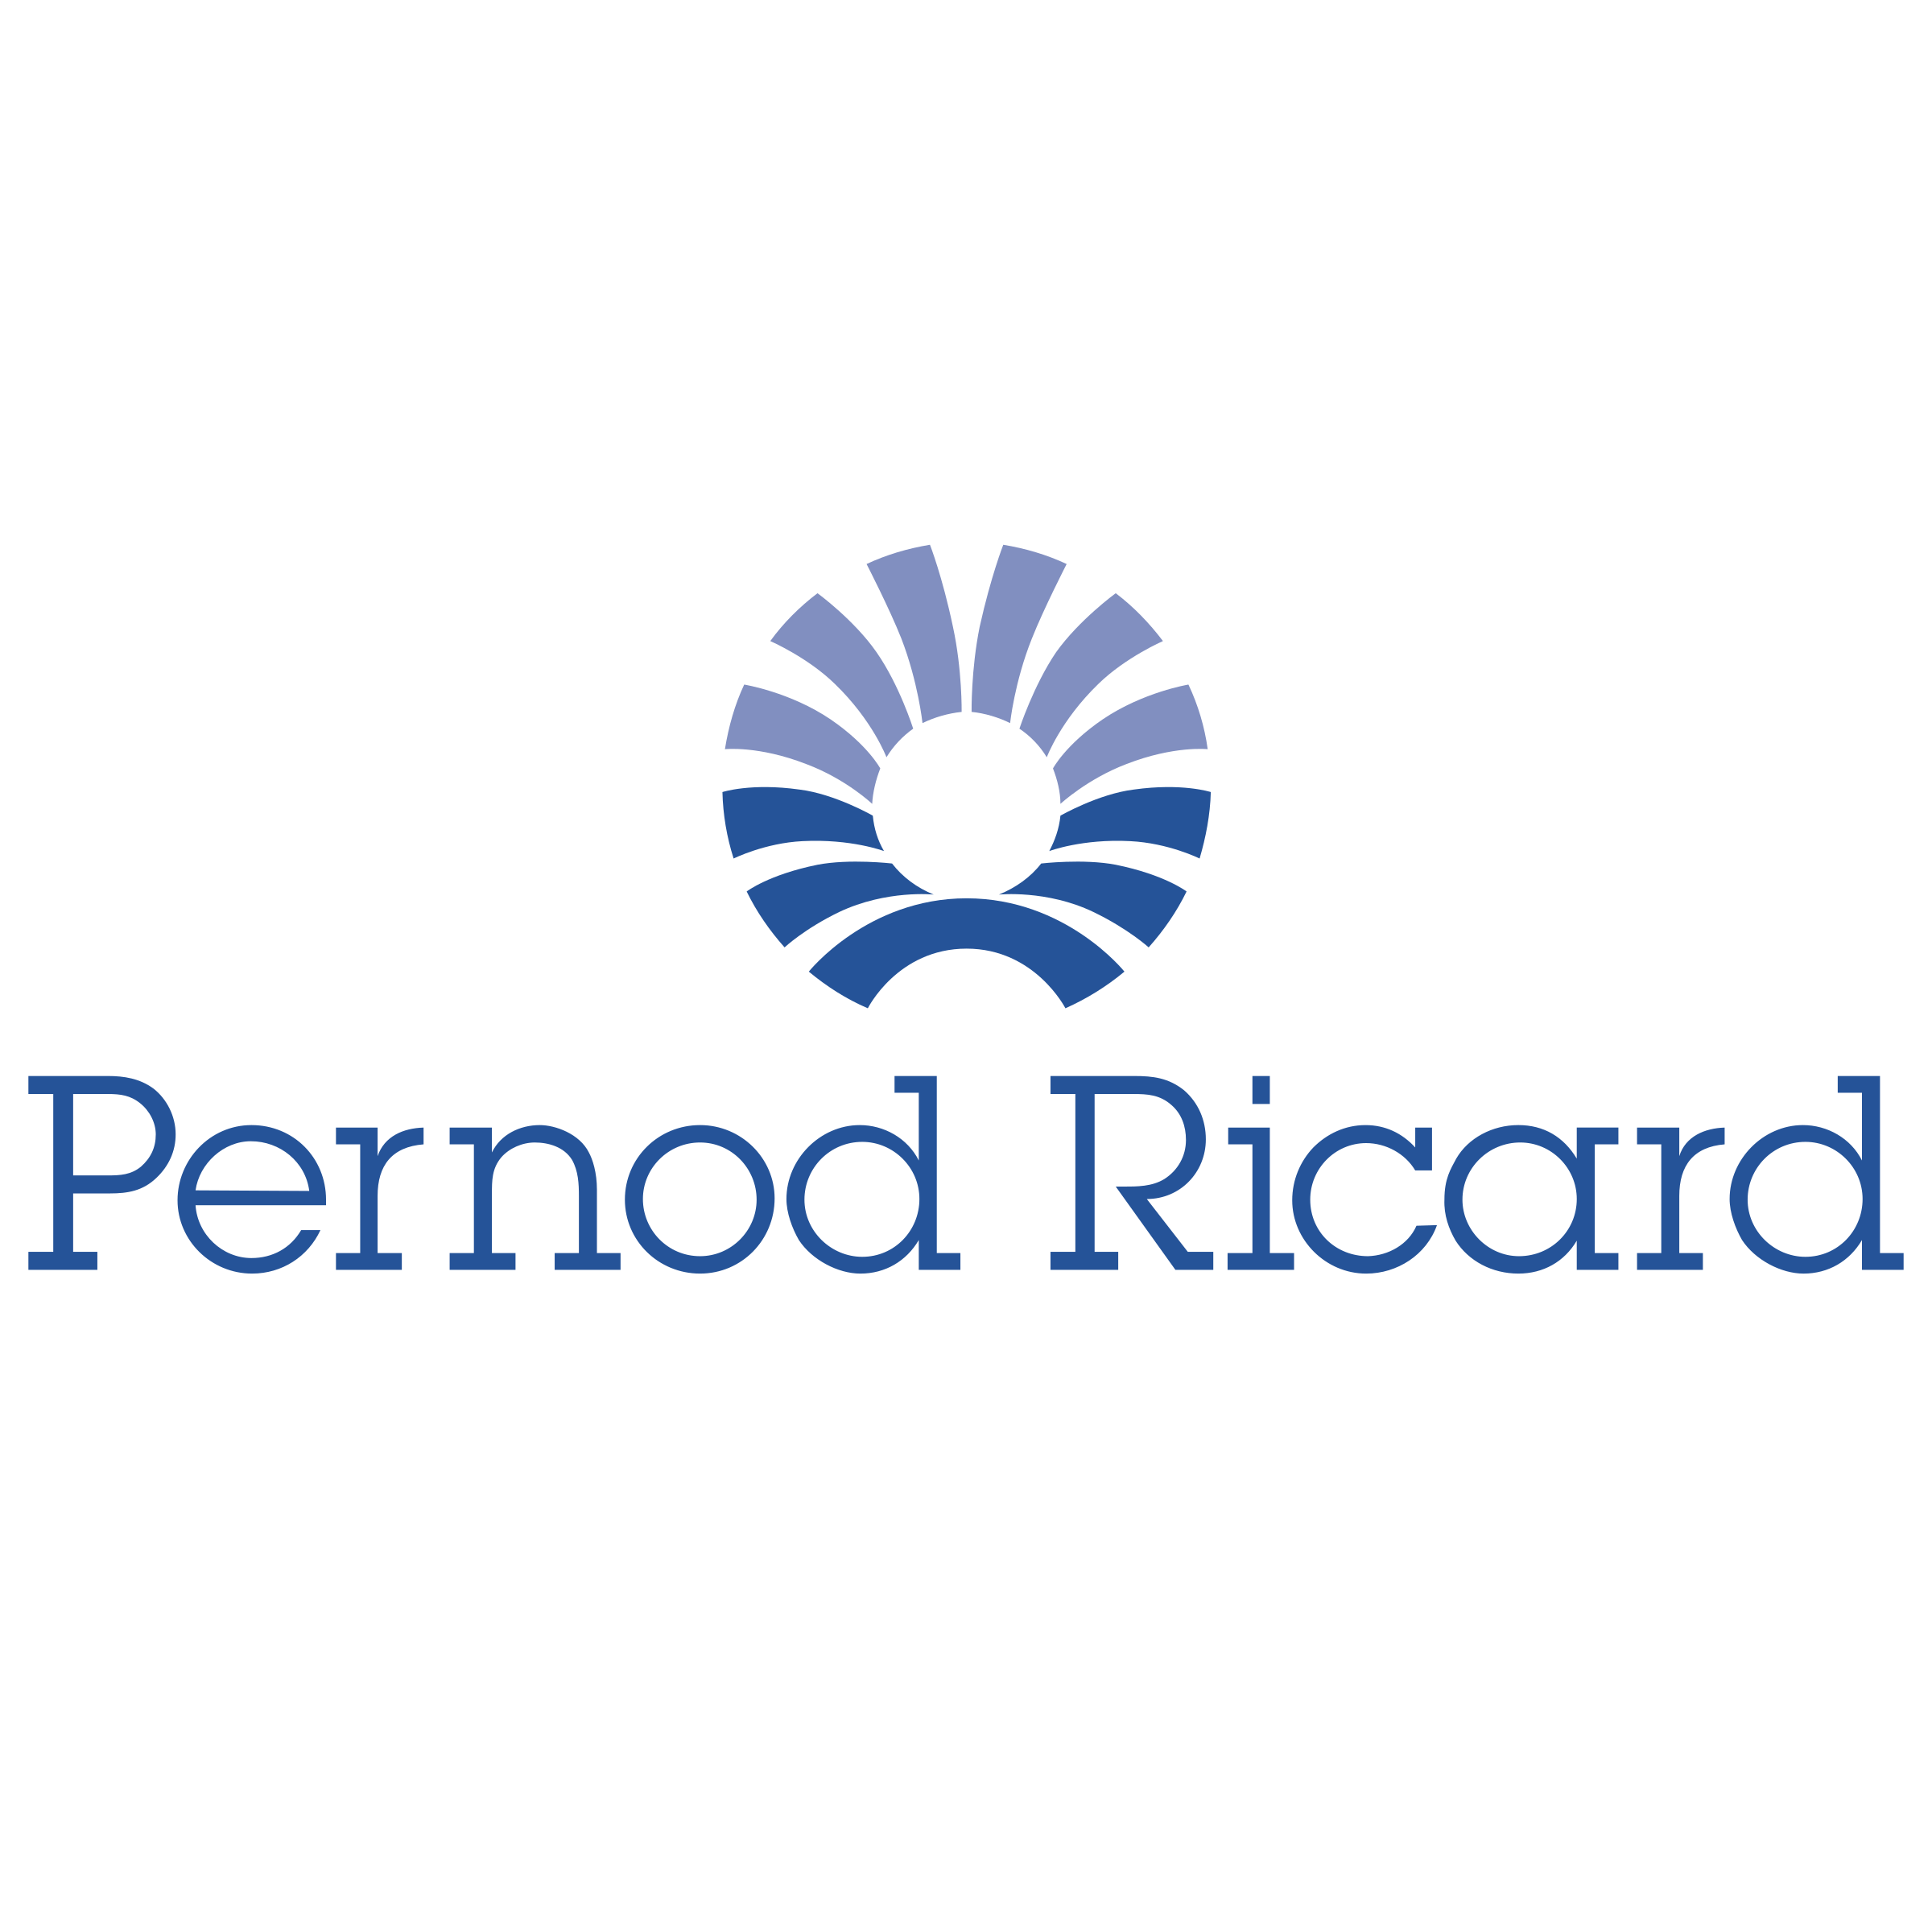 pernod-ricard-logo-png-transparent (1)